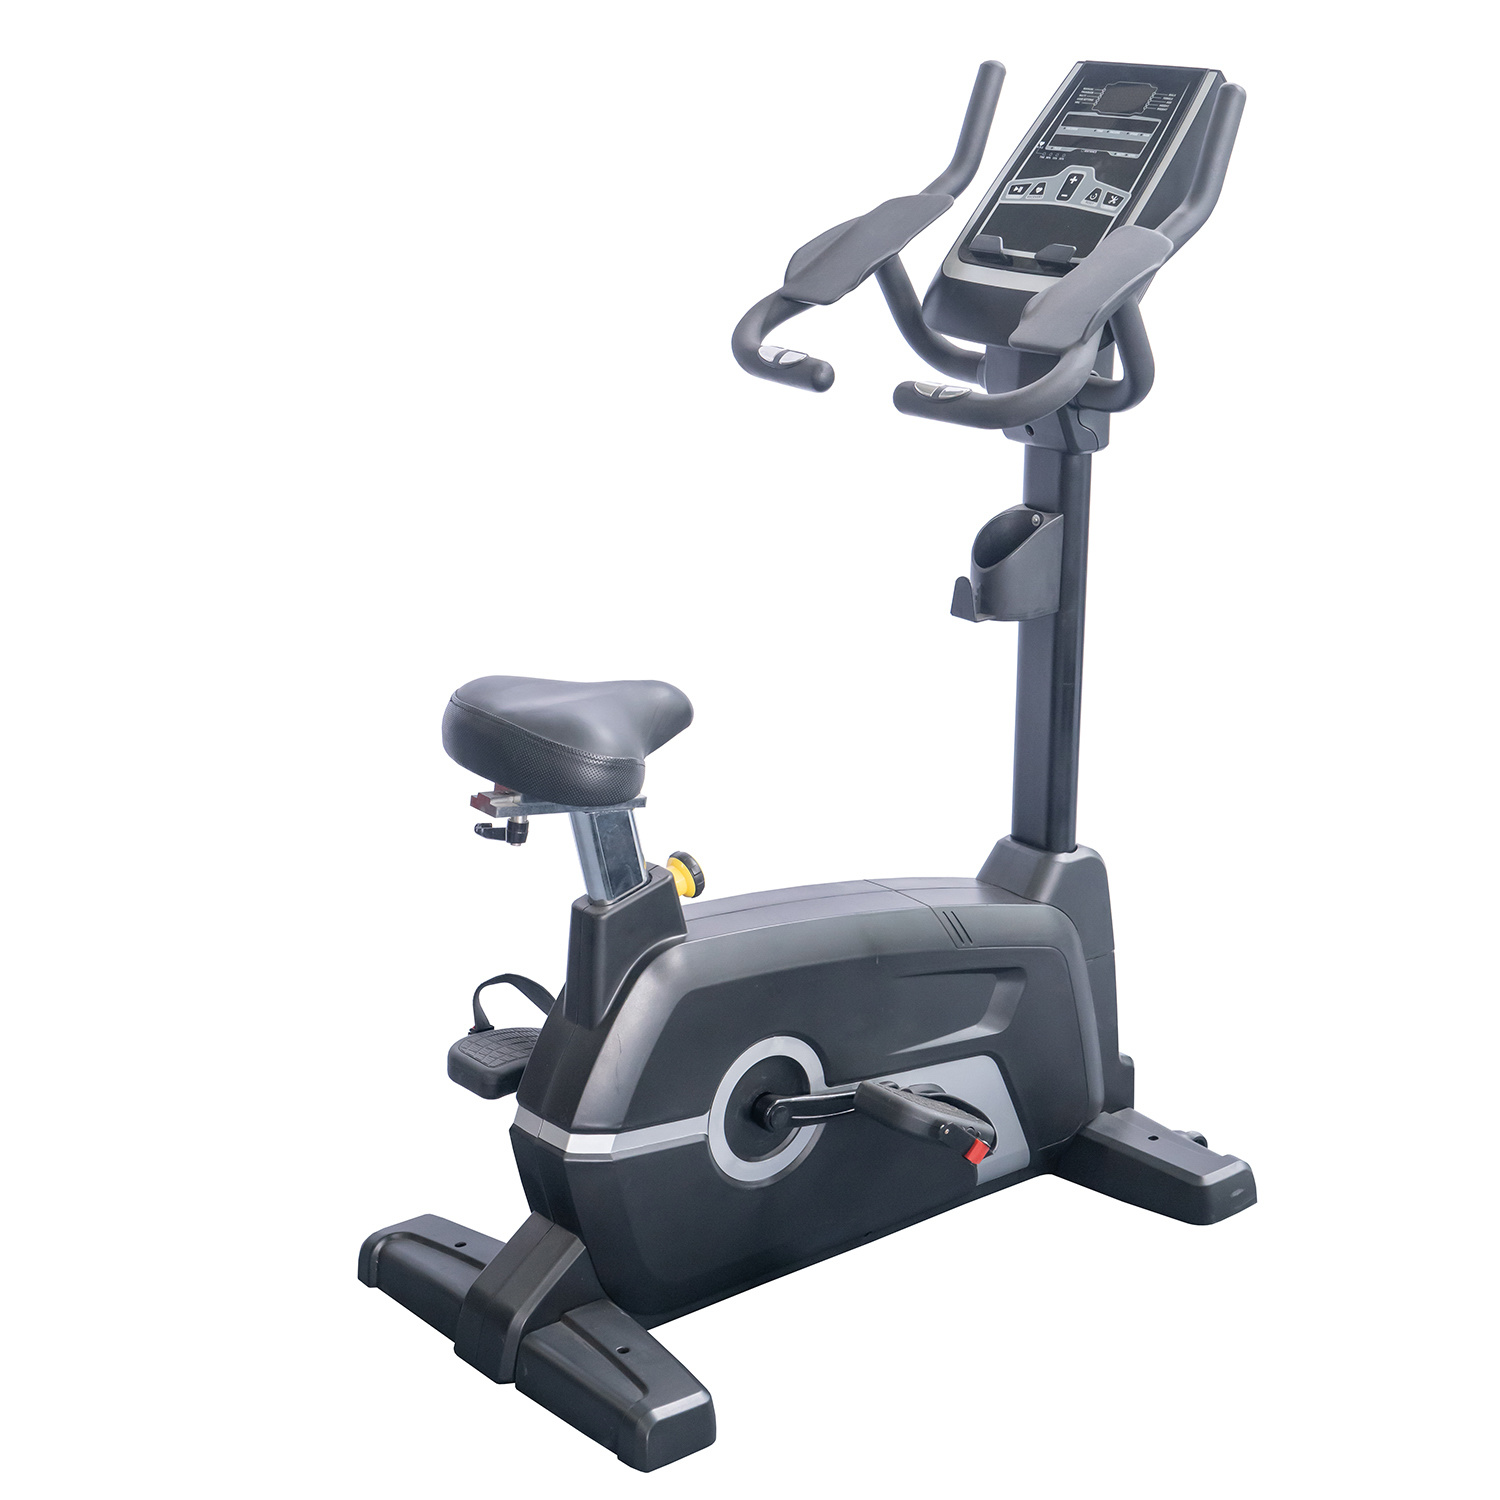 Upright exercise Bike ( Self - Powered ) gym fitness equipment machine